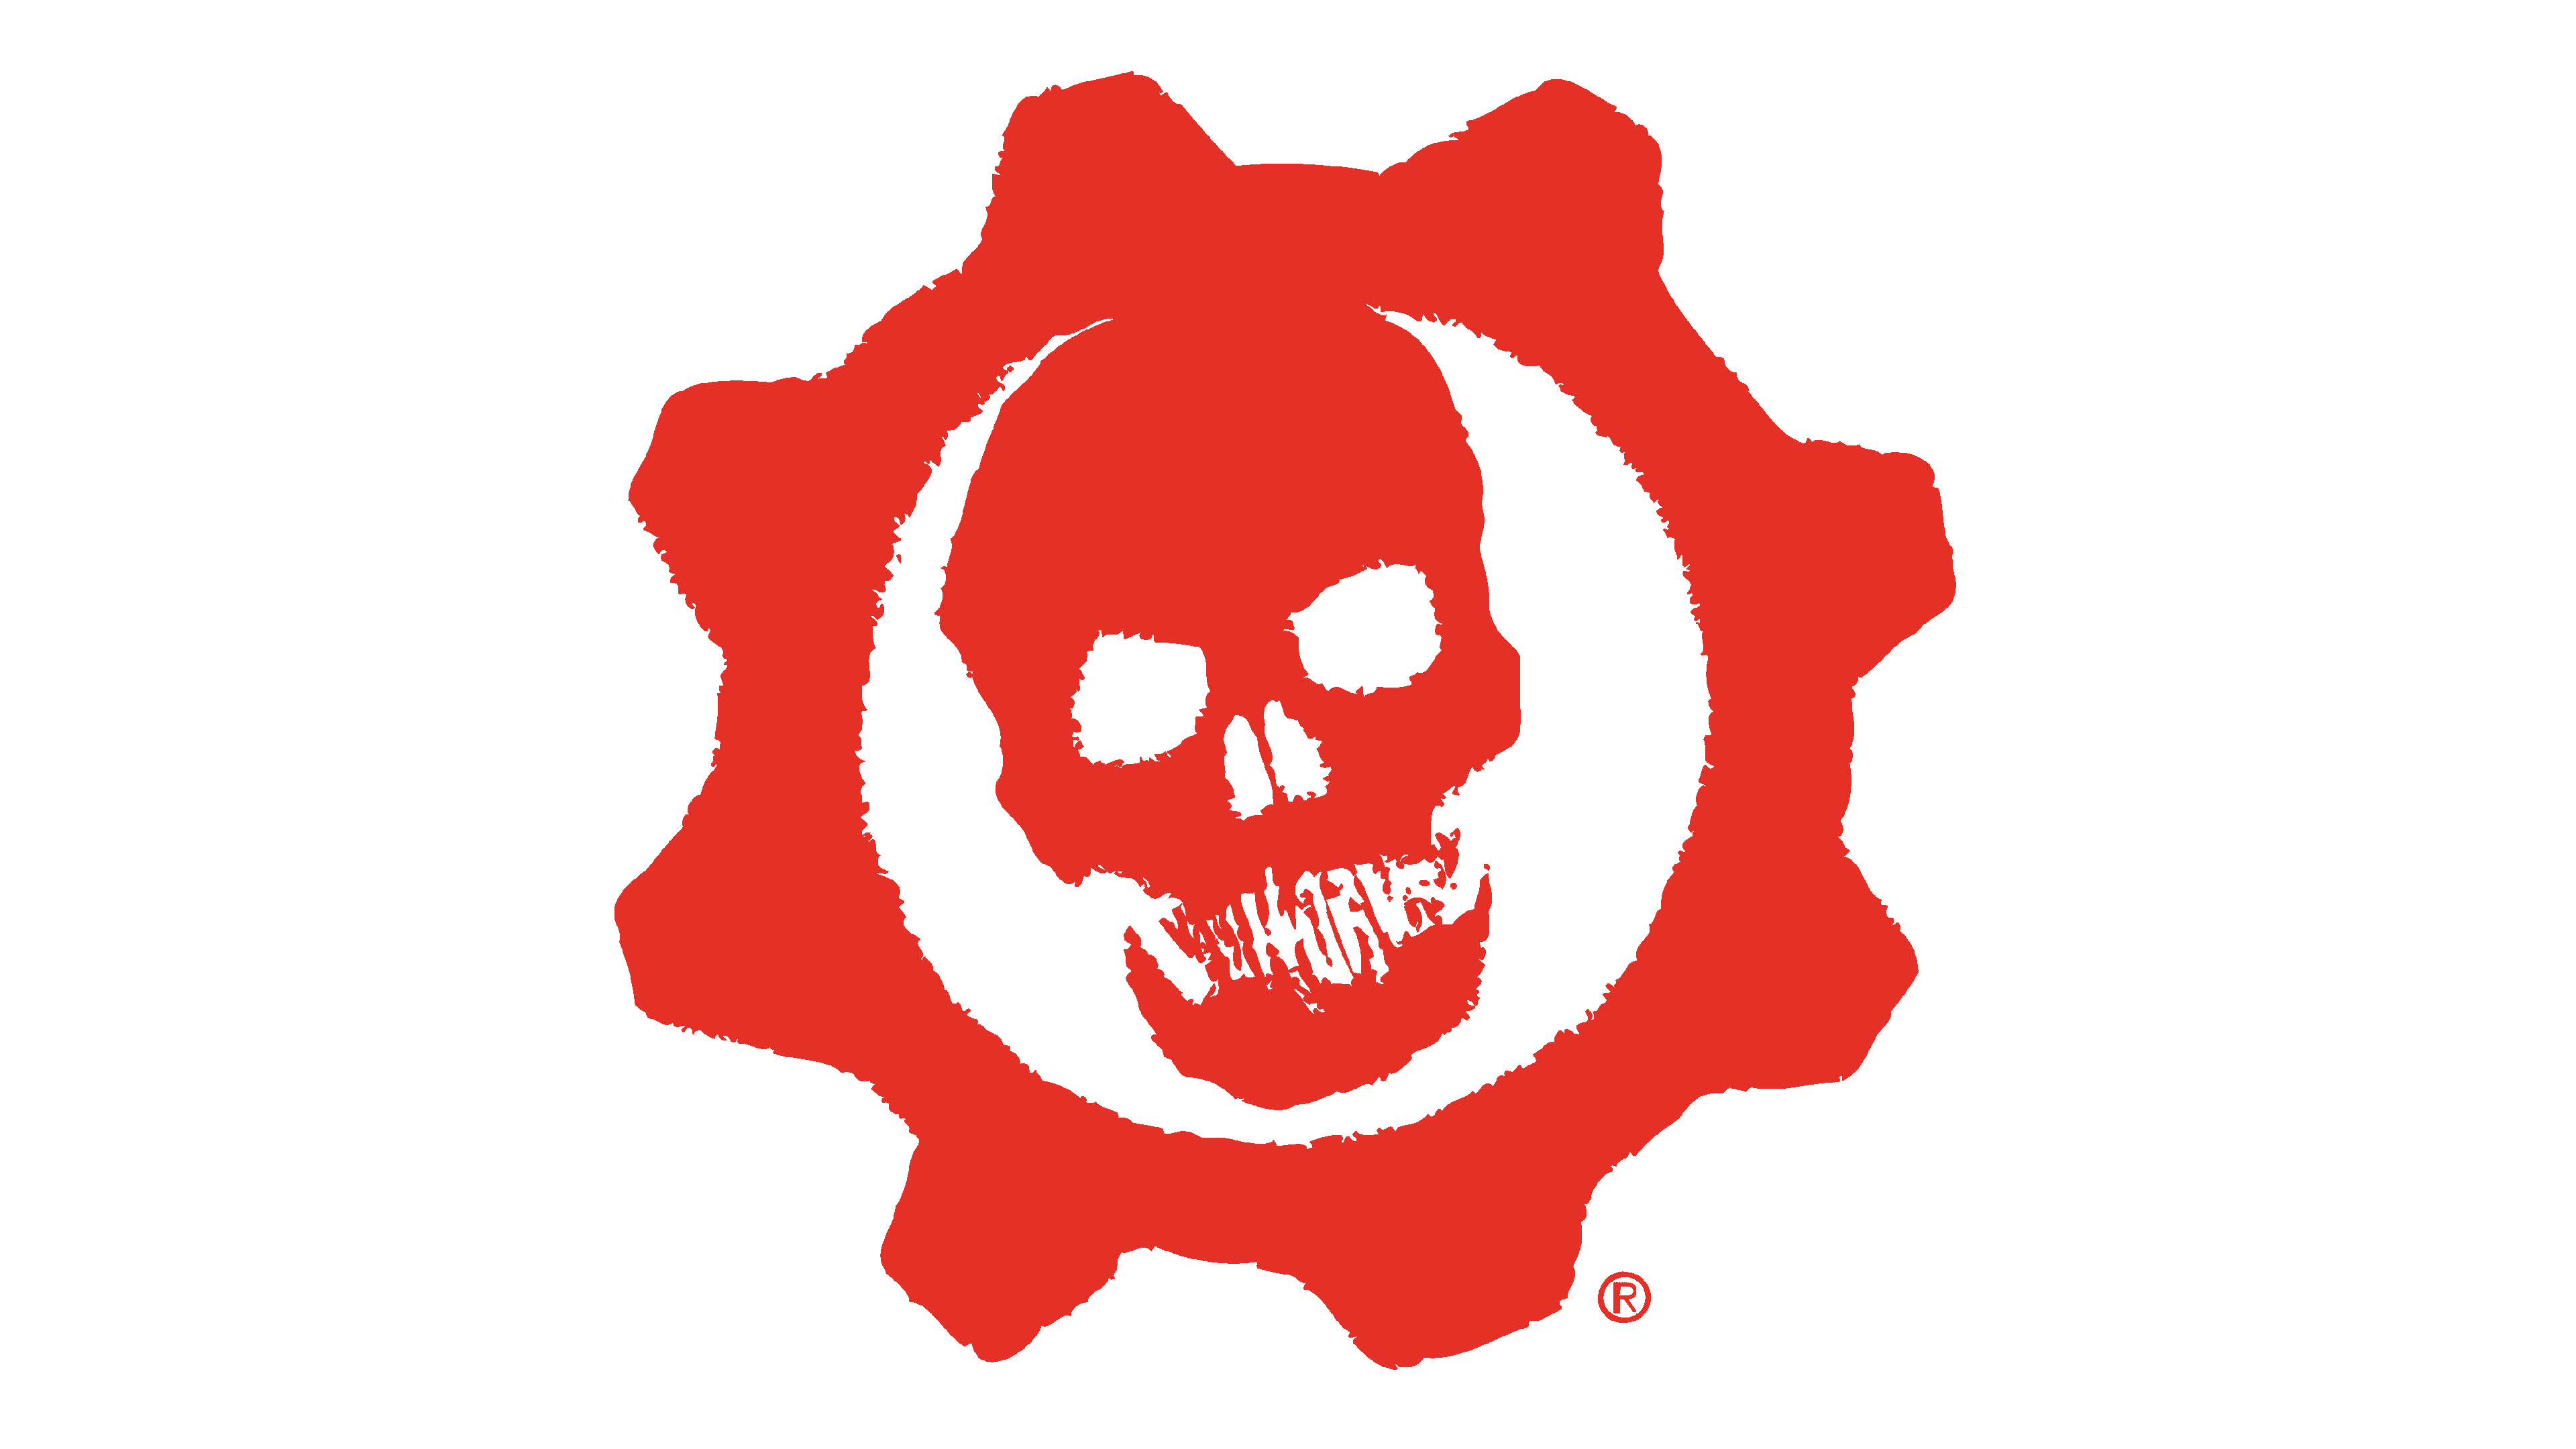 Gears of War Logo Logo